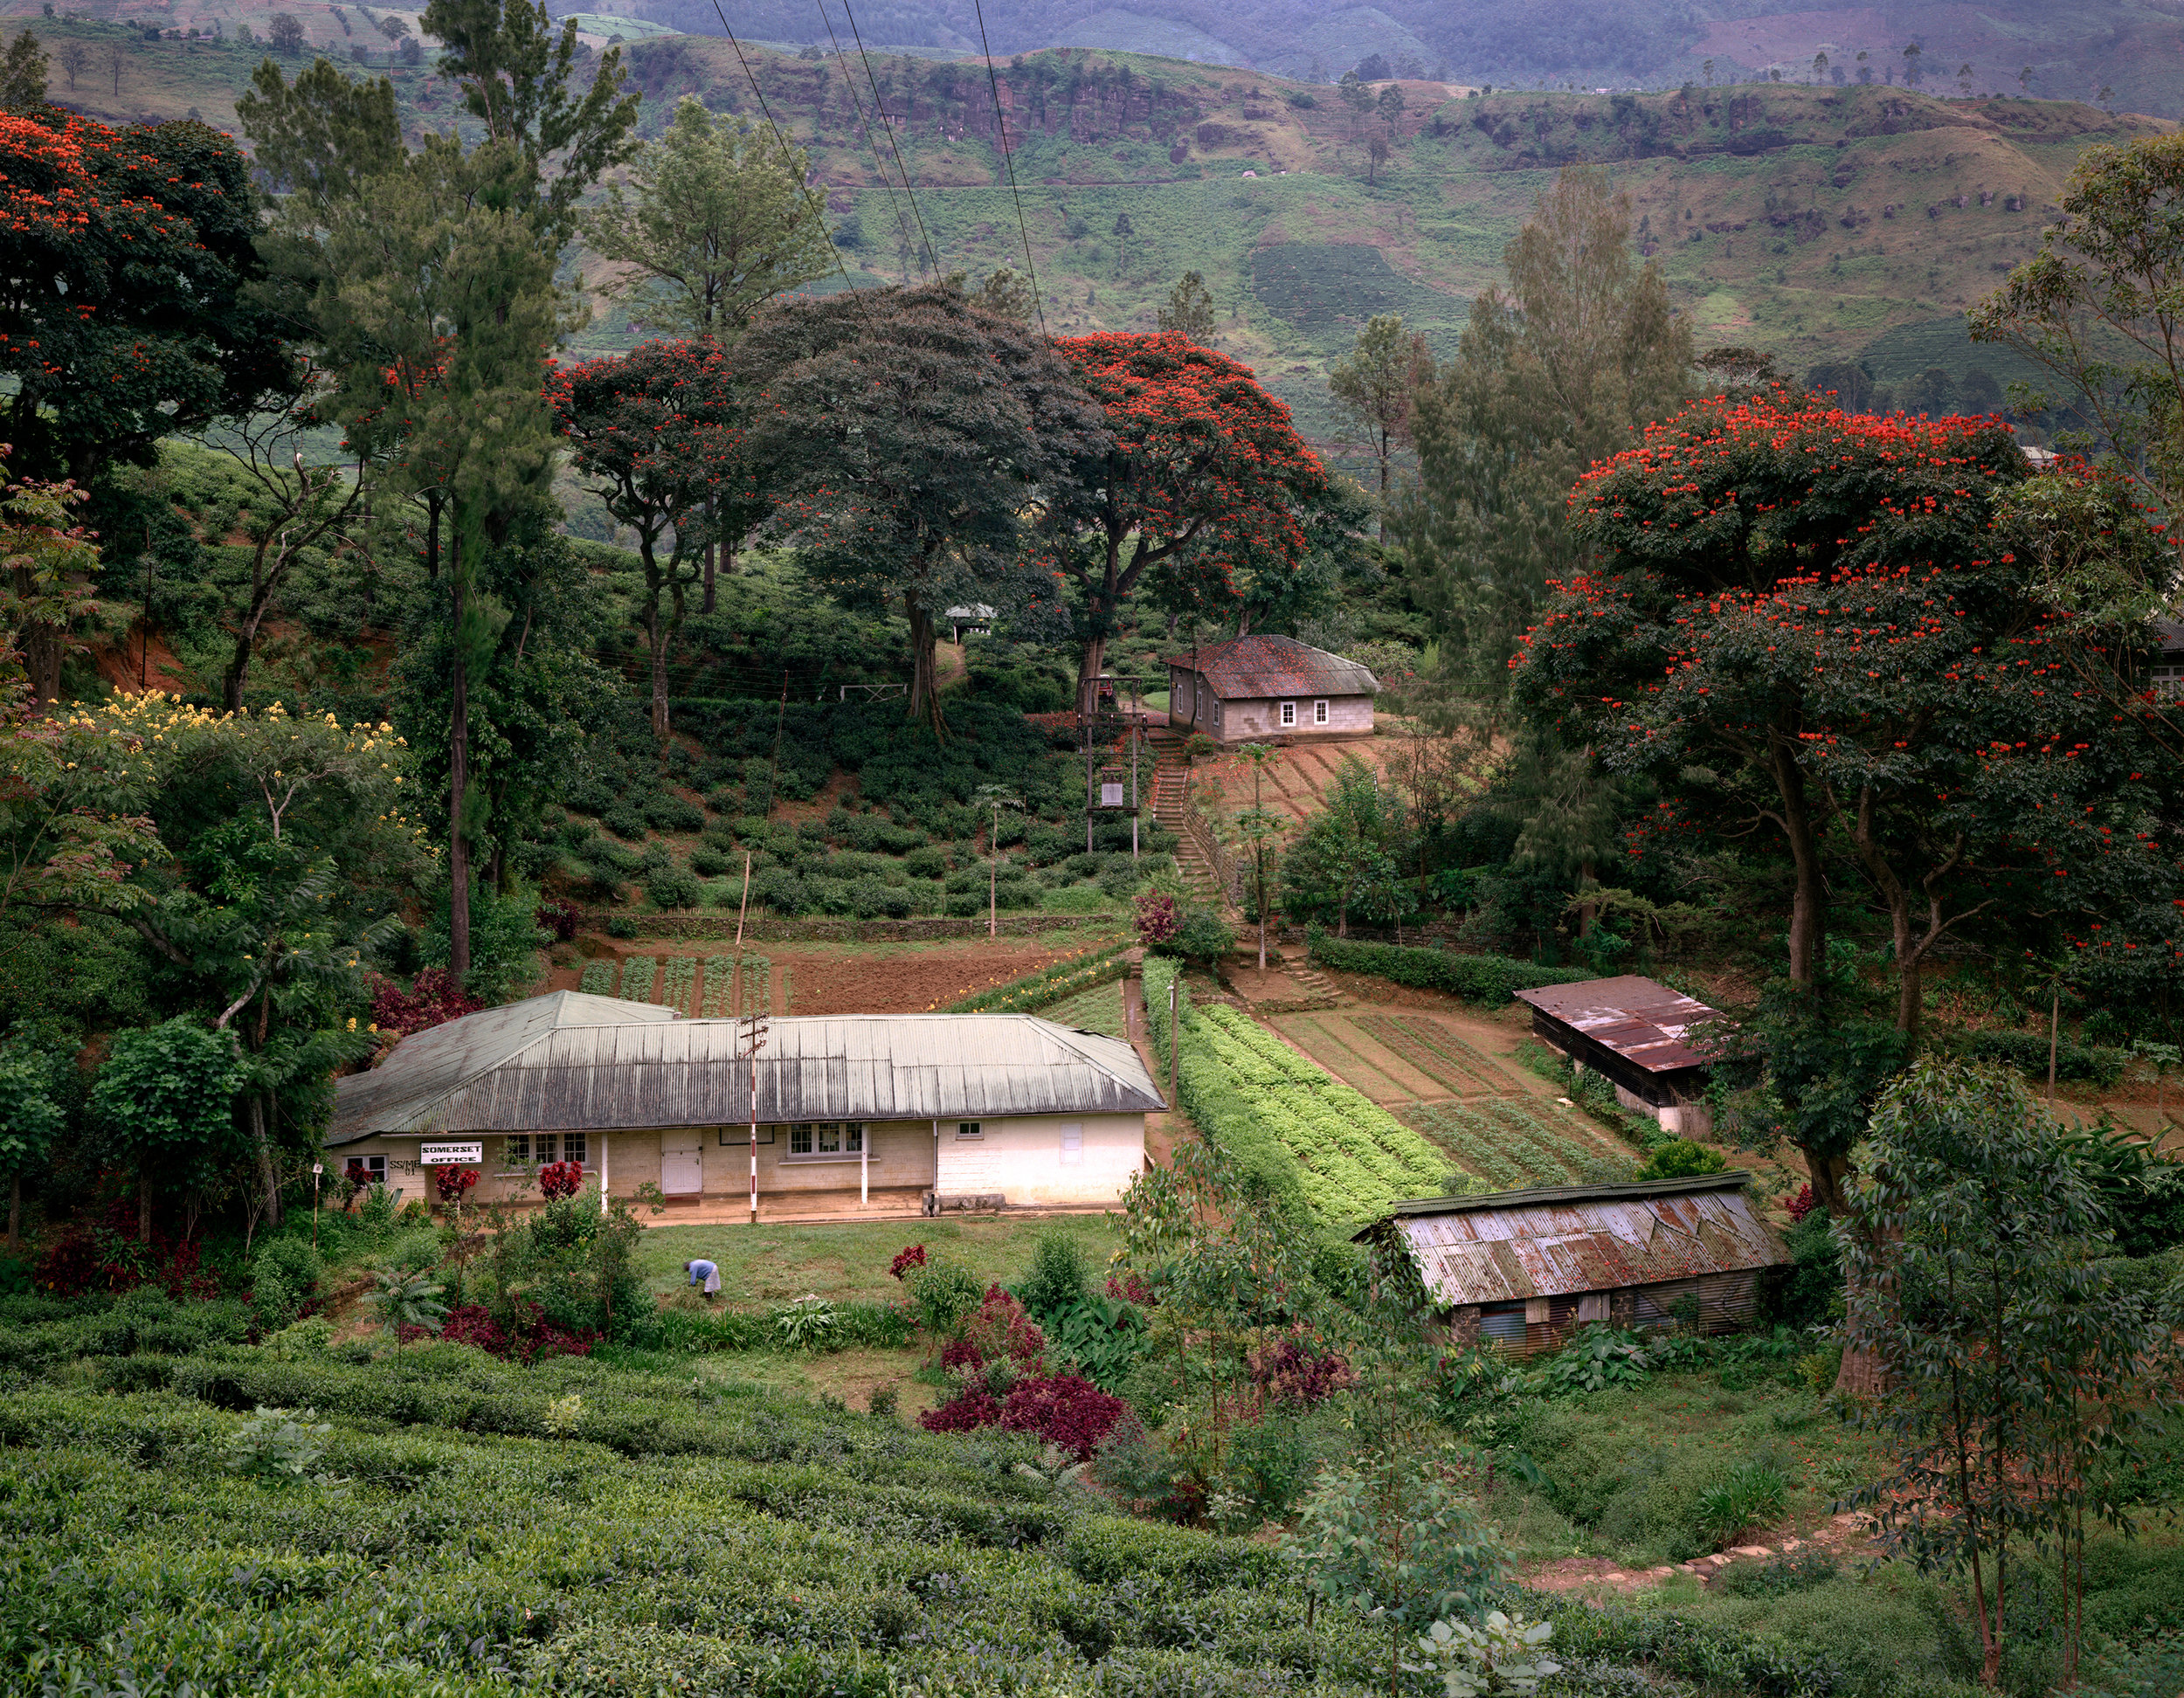  Somerset Tea Plantation Office and Flame Trees in the Jungle, near Nuawra Eliya, Sri Lanka, 1993 